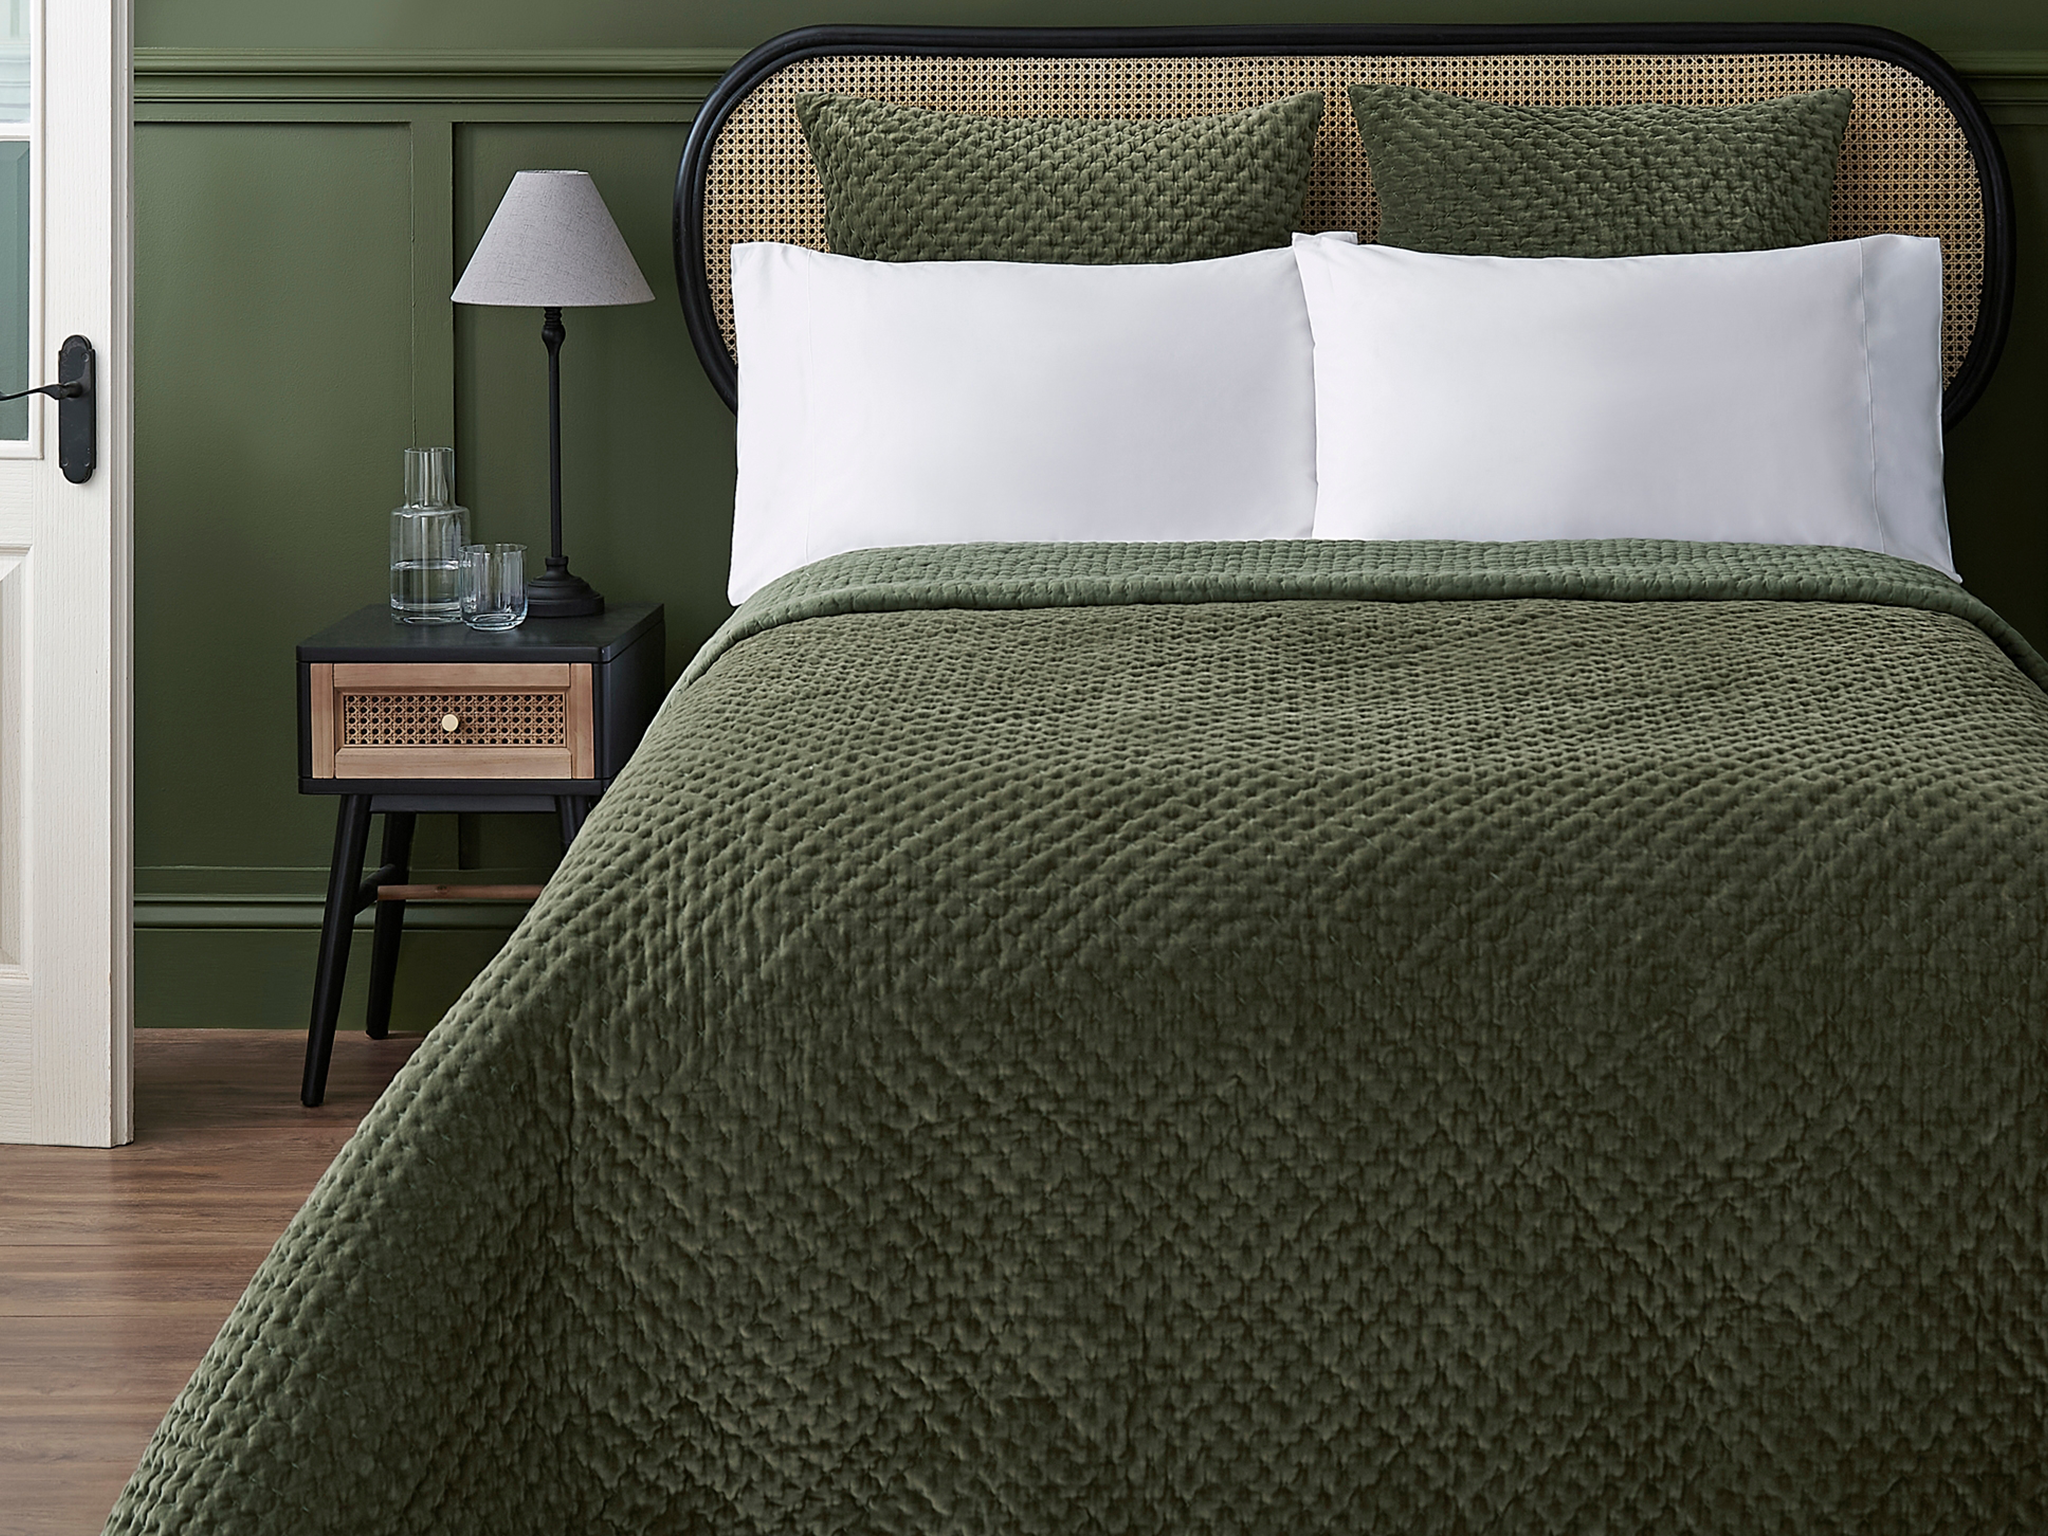 Dorma genevieve green bedspread, large.png